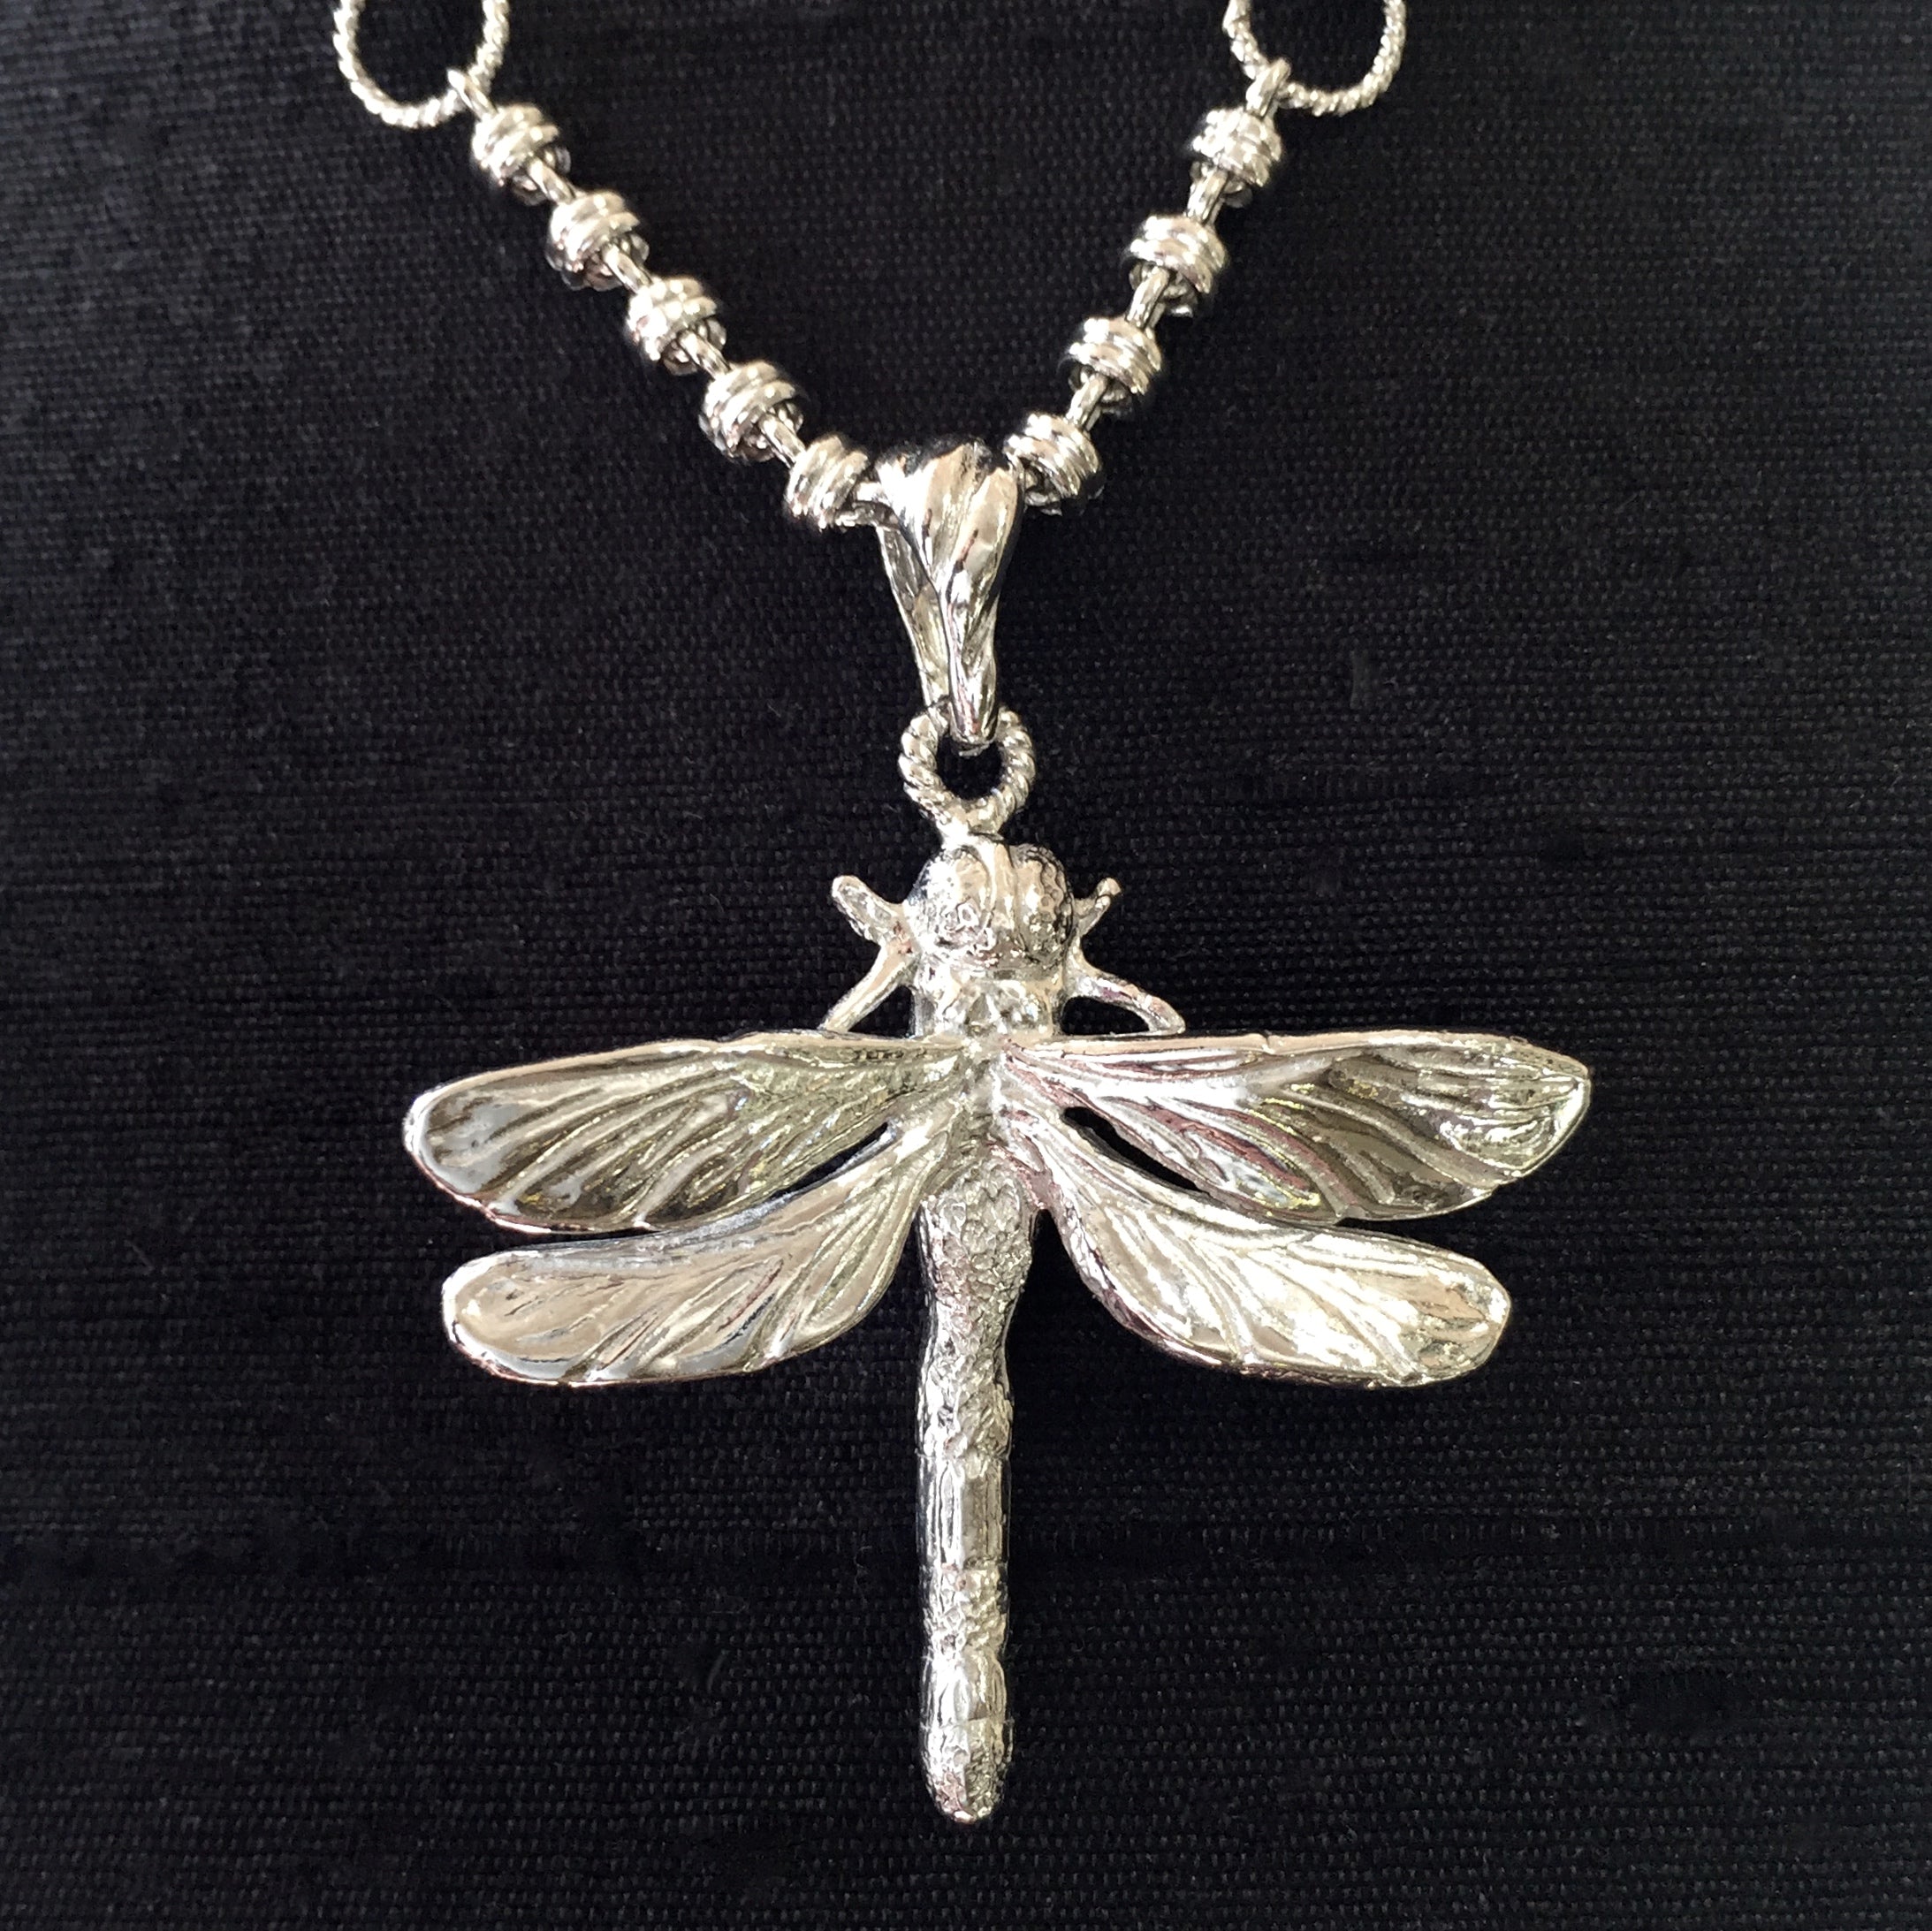 Medium Dragonfly Pendant in Silver